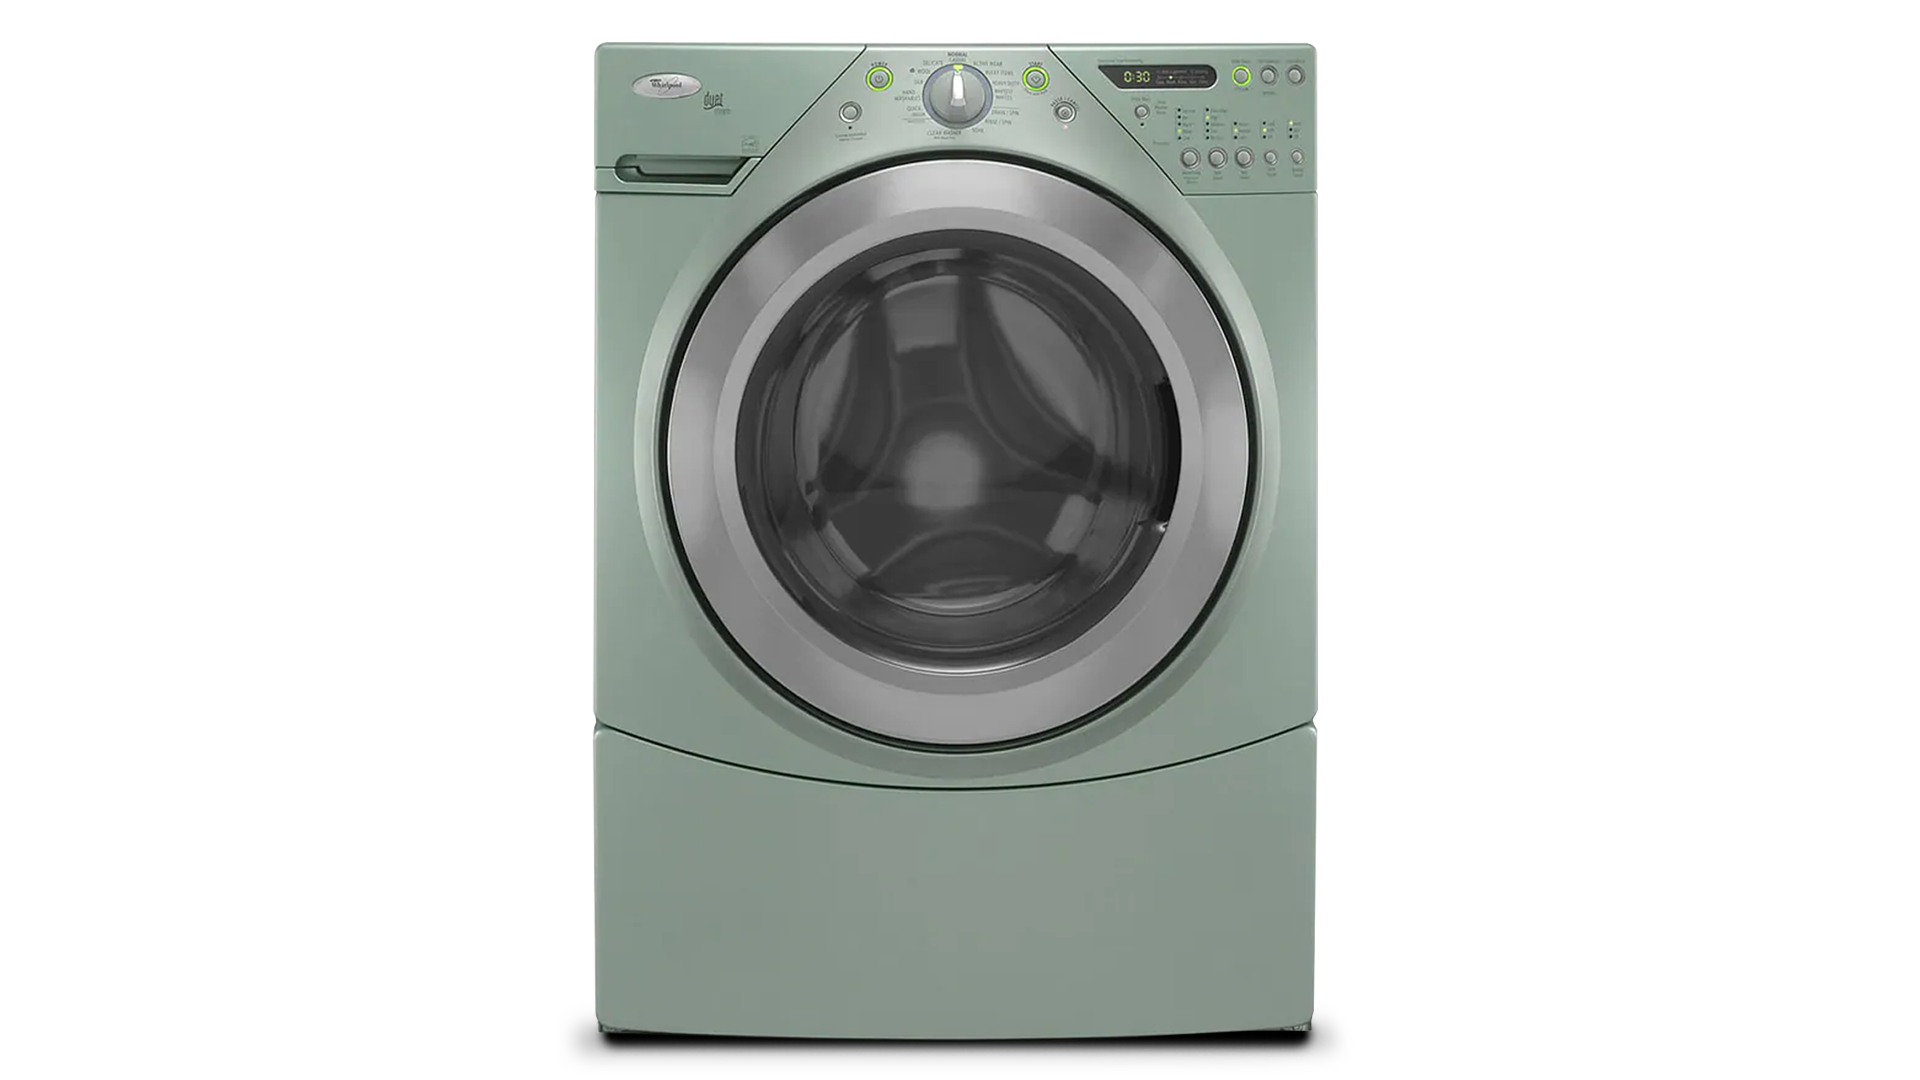 Whirlpool Laundry Appliances Repair Seattle | Whirlpool Appliance Repair